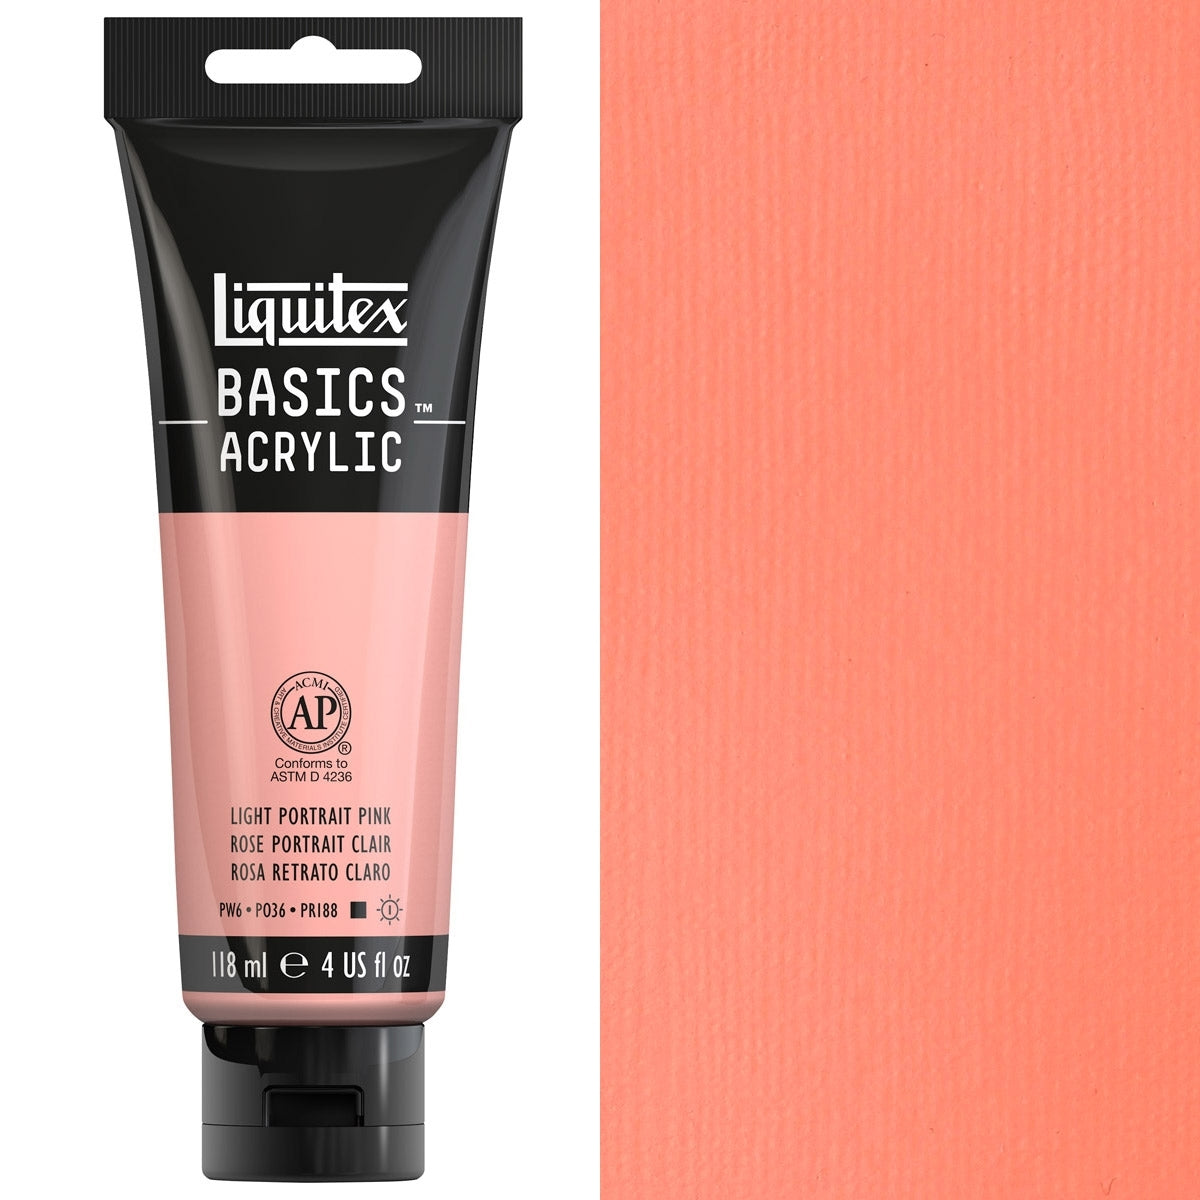 Liquitex Basics Acrylic Fluid Paint - Light Pink, 118 ml